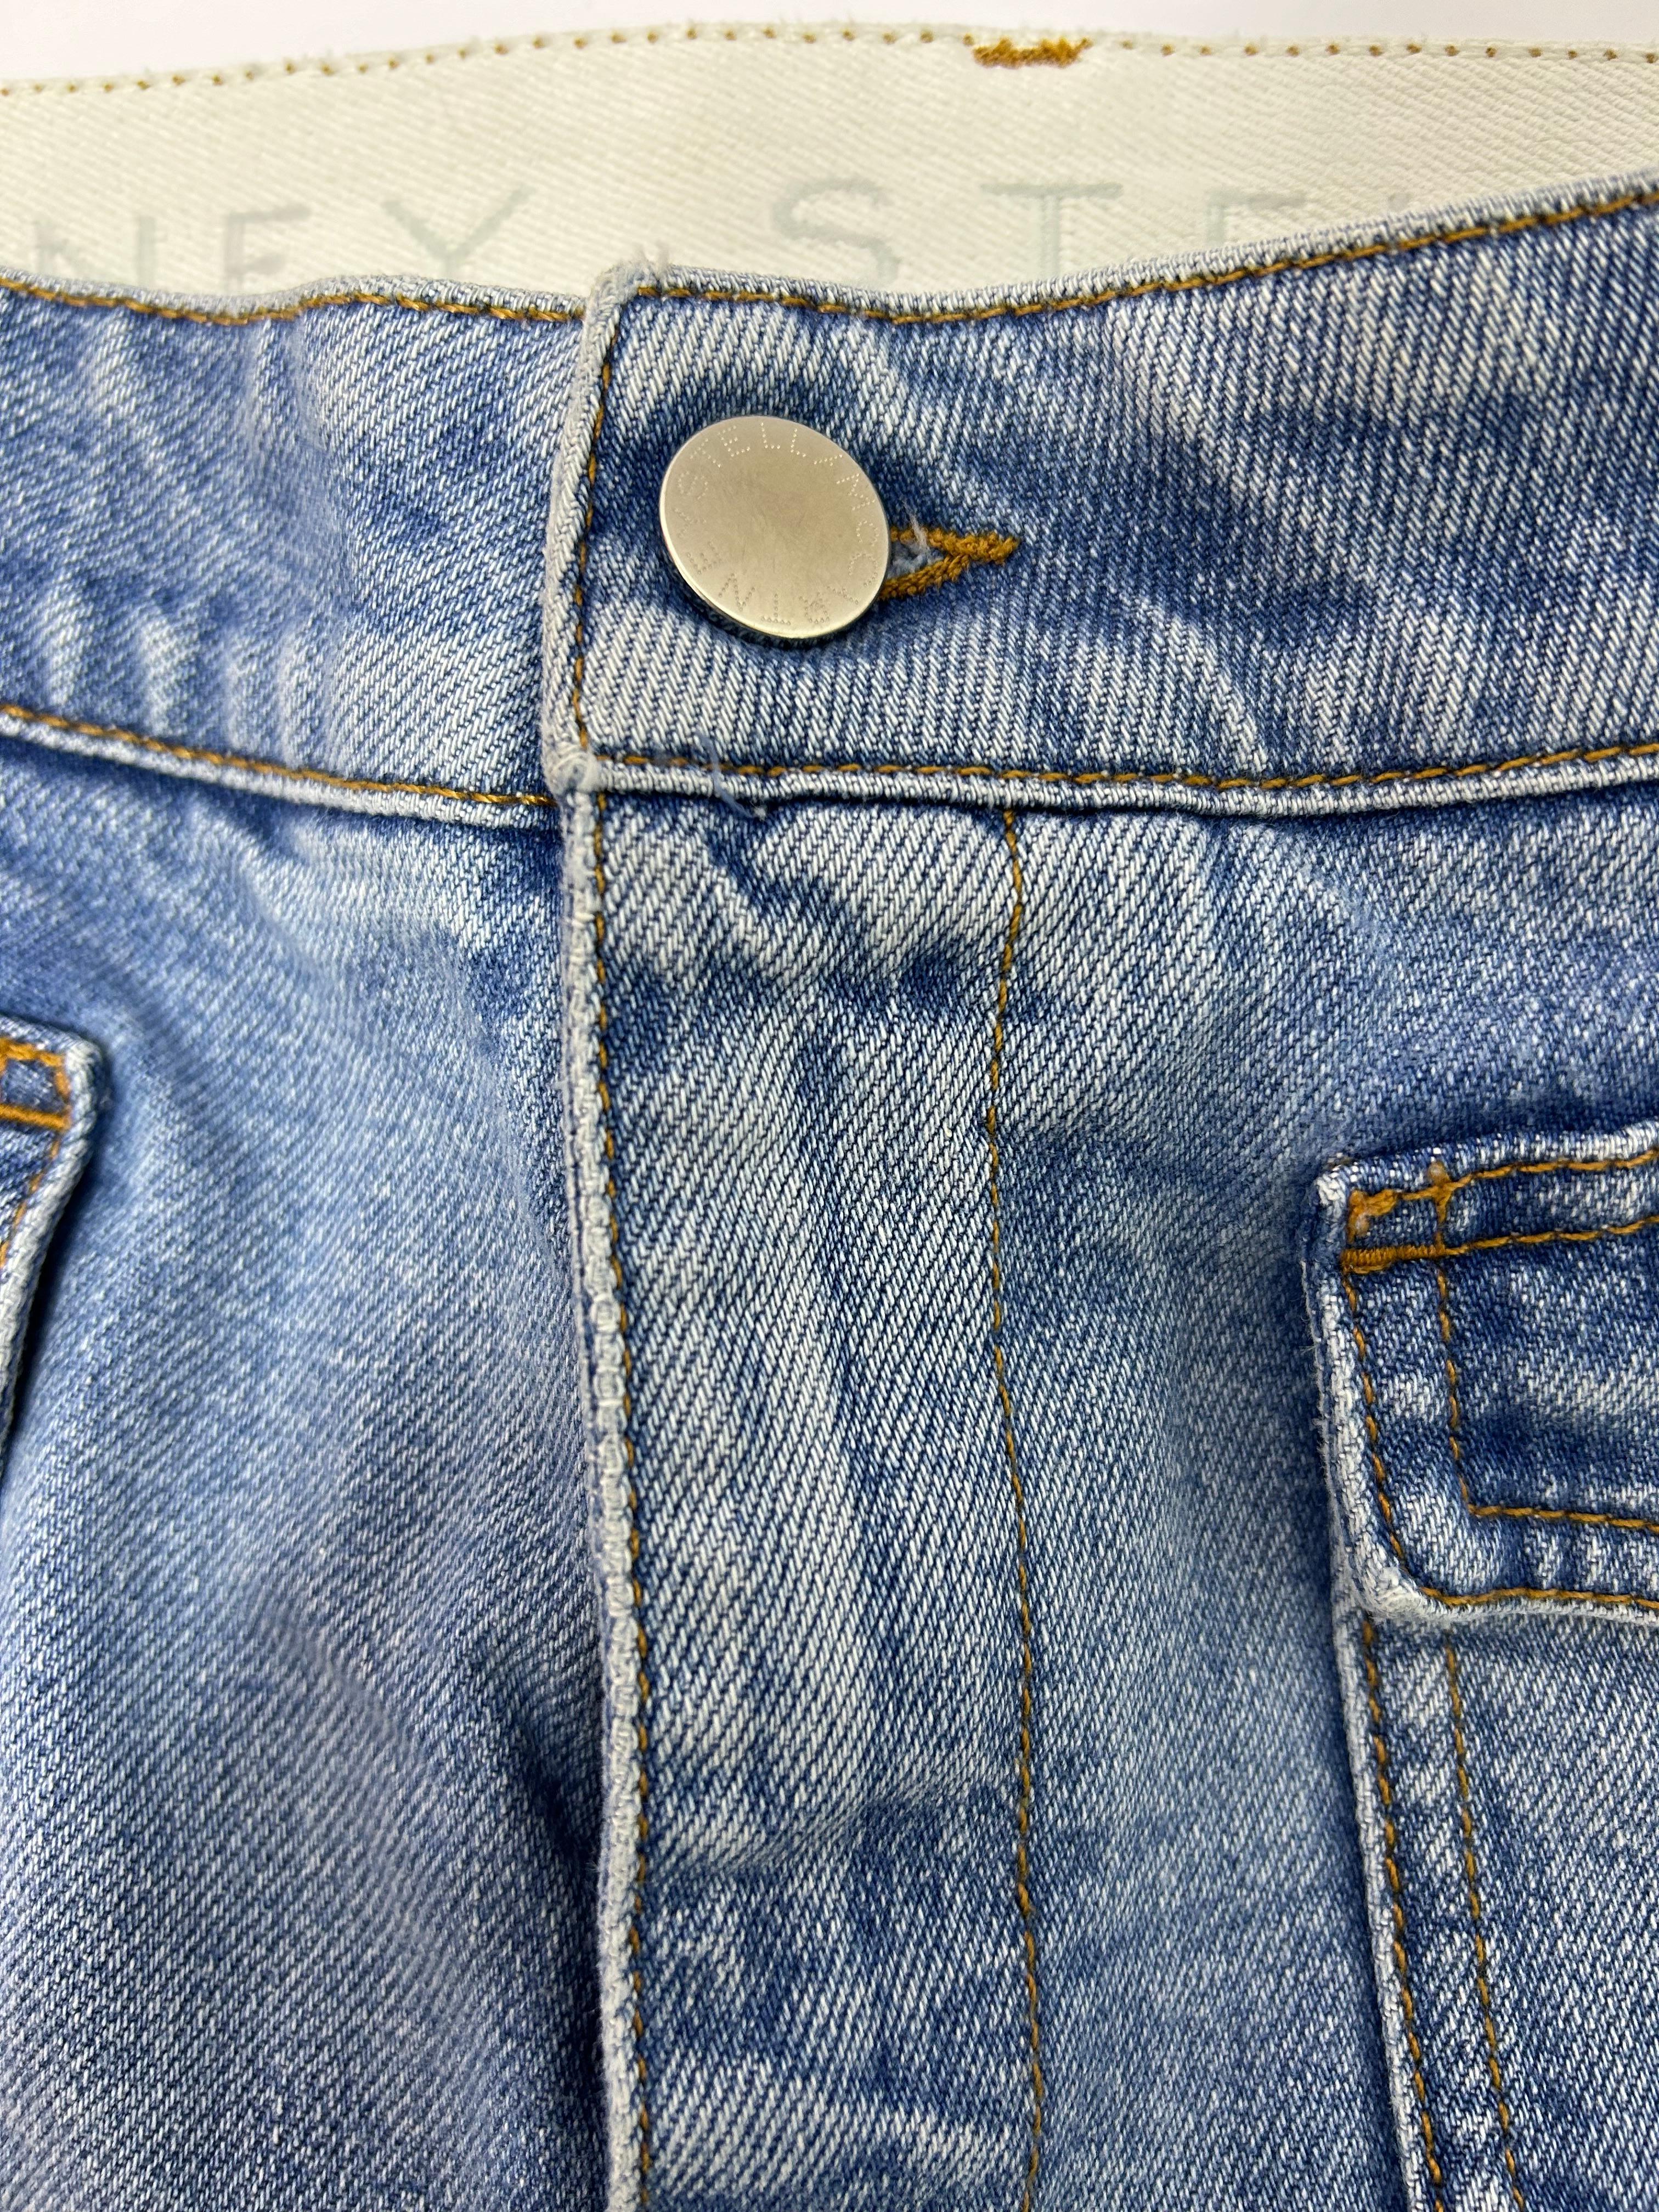 Stella McCartney high-rise flared jeans size EU 36 For Sale 1